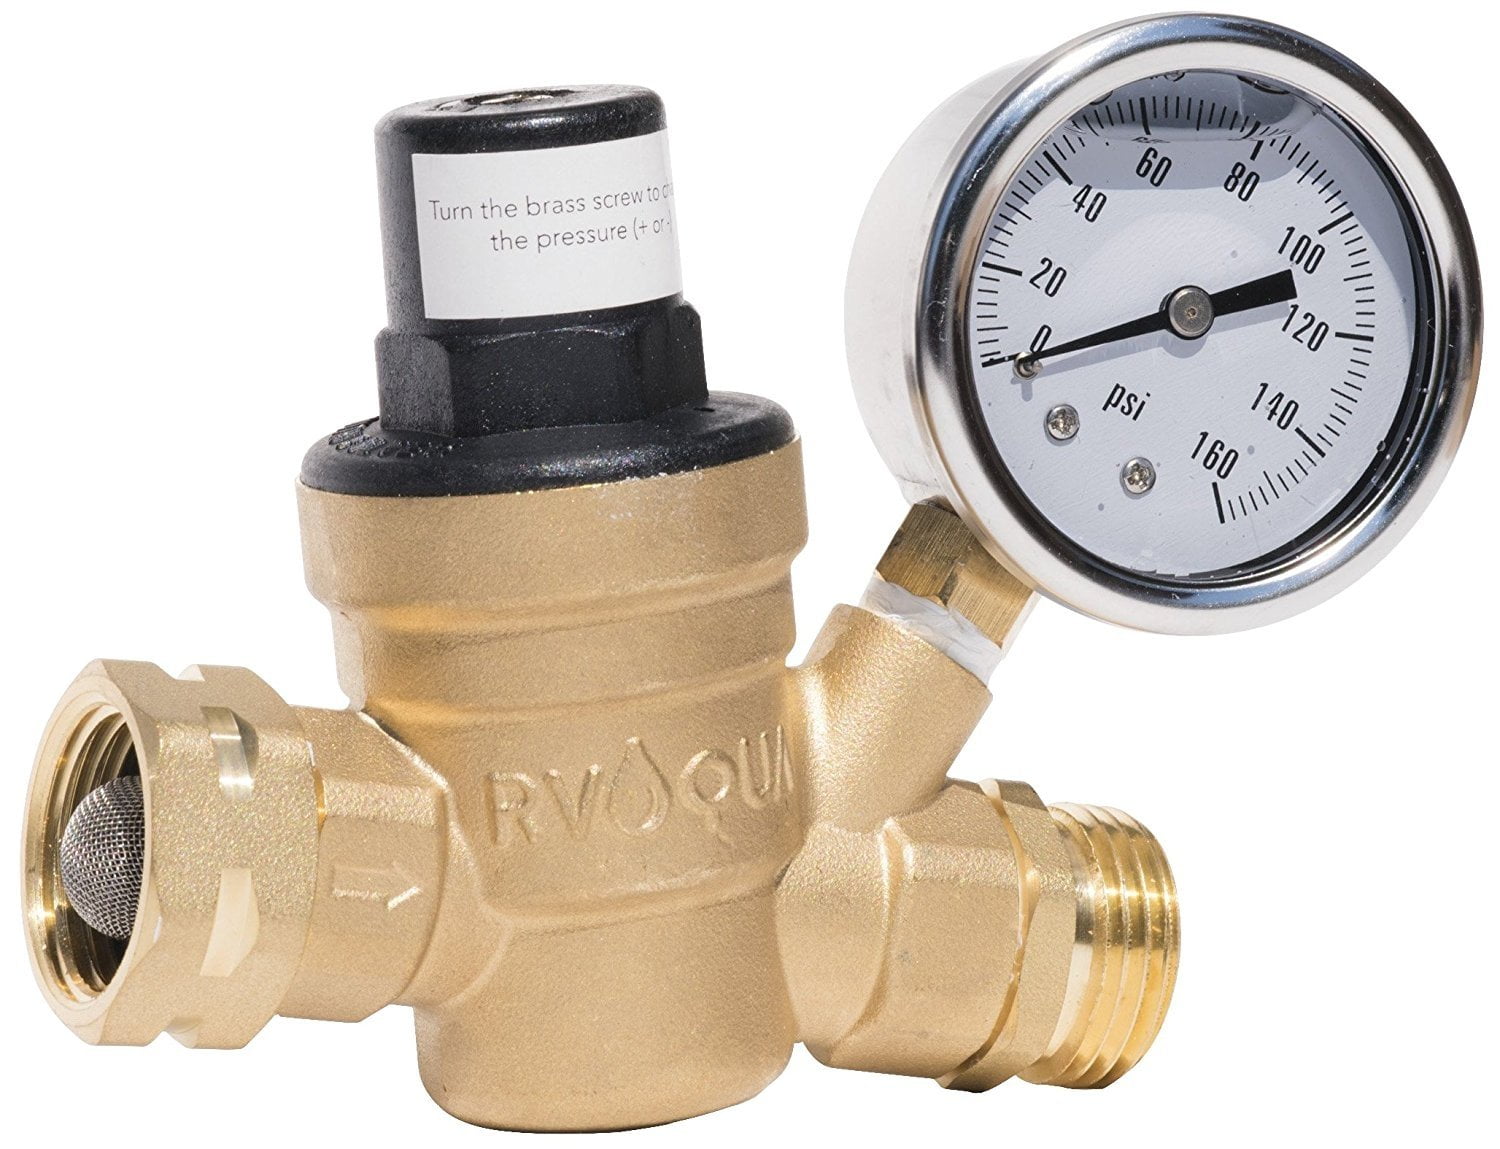 RVAQUA M11-45PSI Water Pressure Regulator For RV Camper - Brass Lead Rv Adjustable Water Pressure Regulator With Gauge